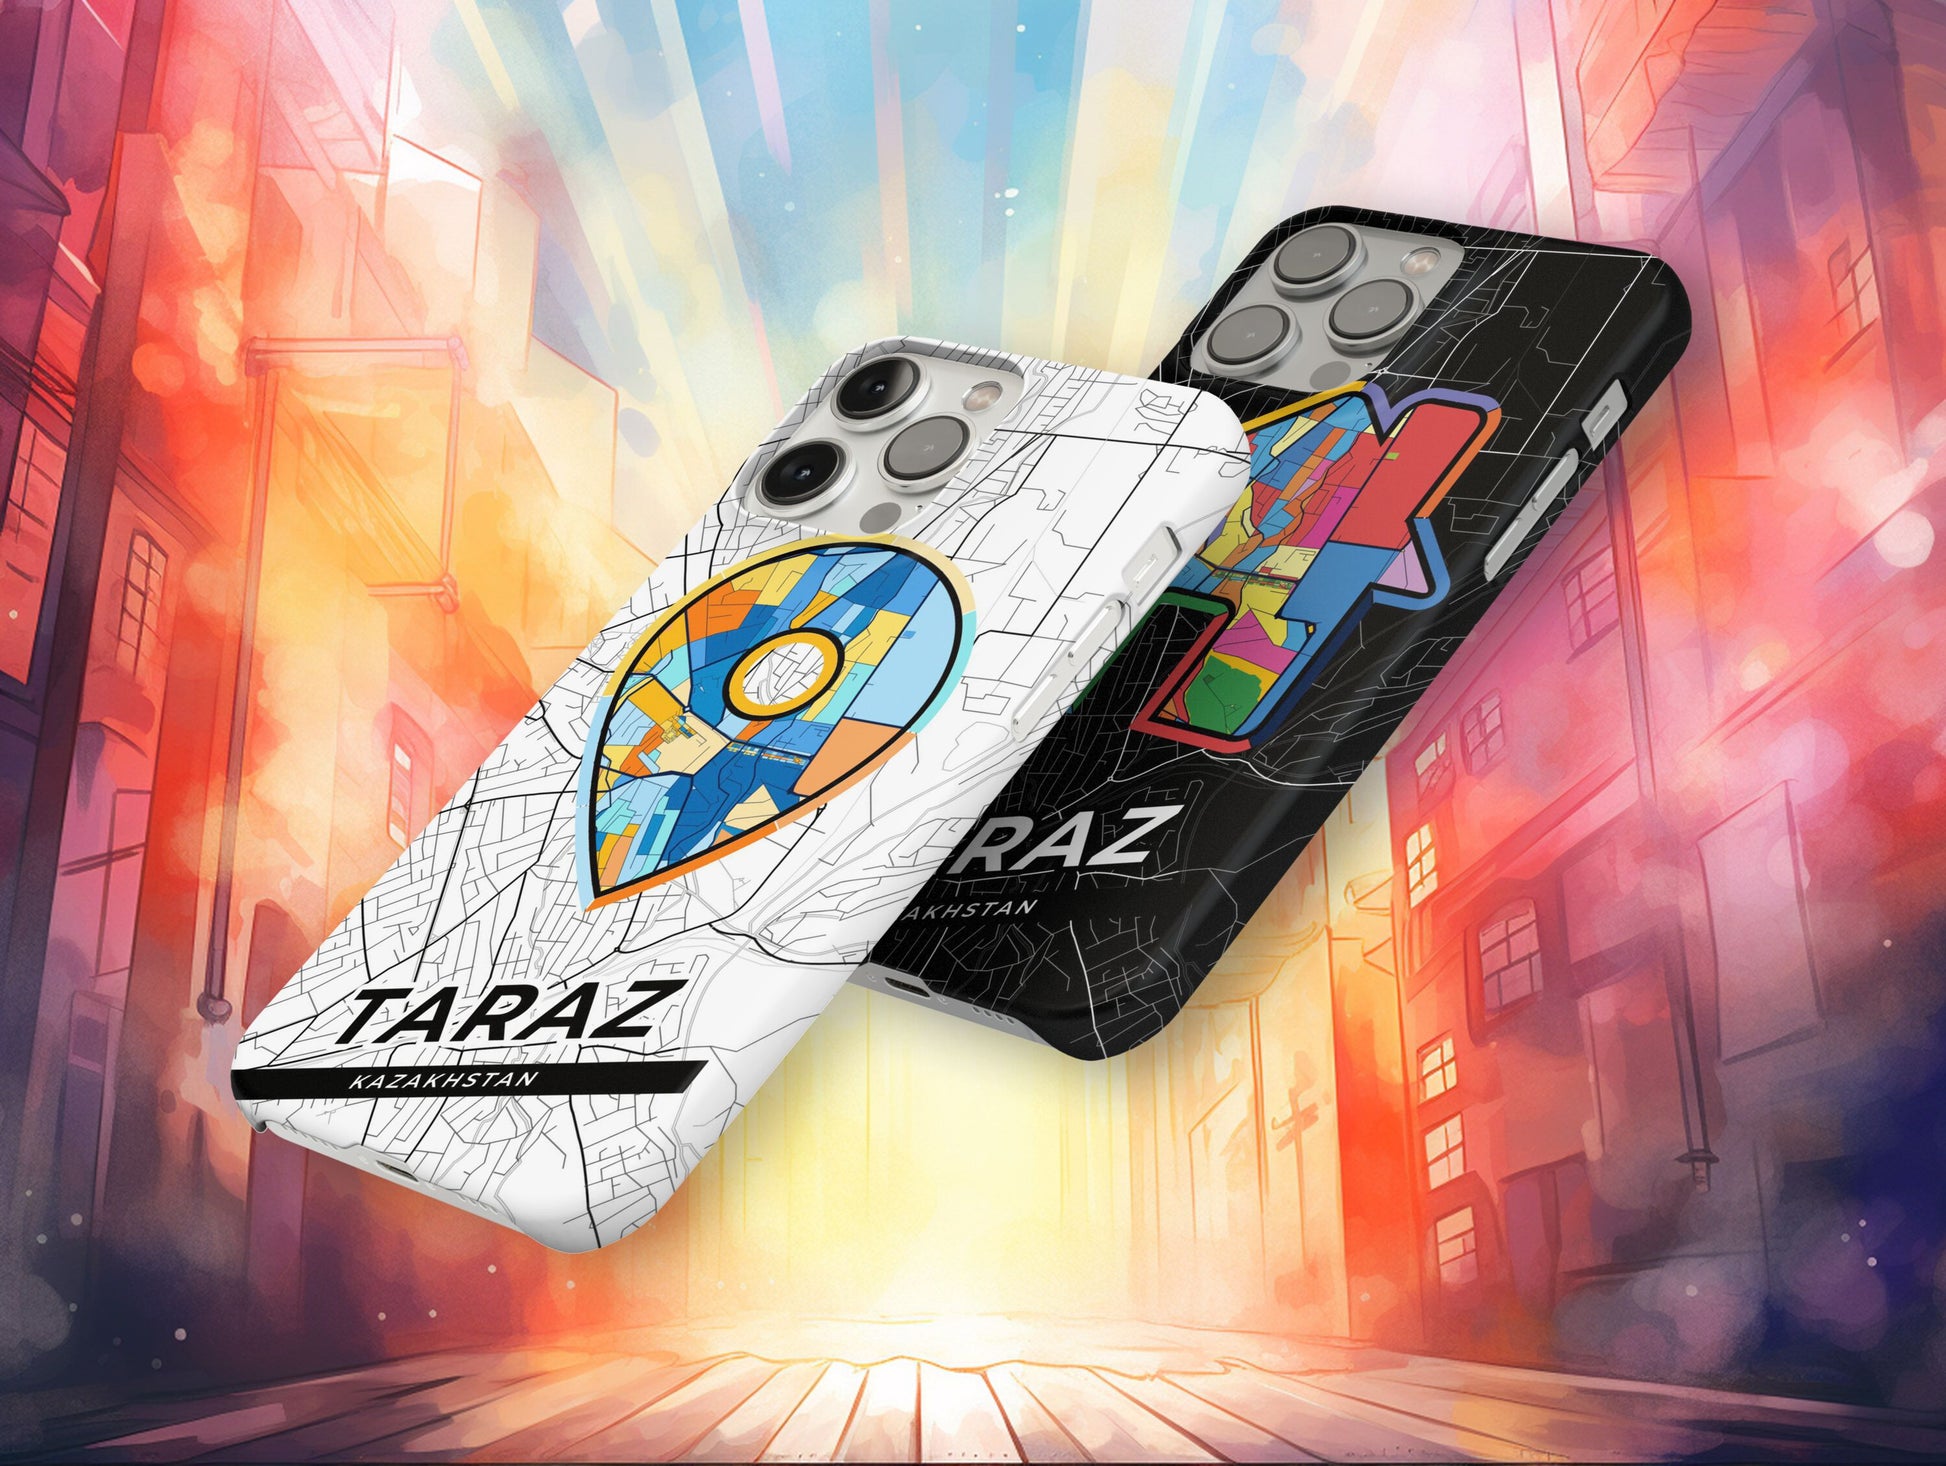 Taraz Kazakhstan slim phone case with colorful icon